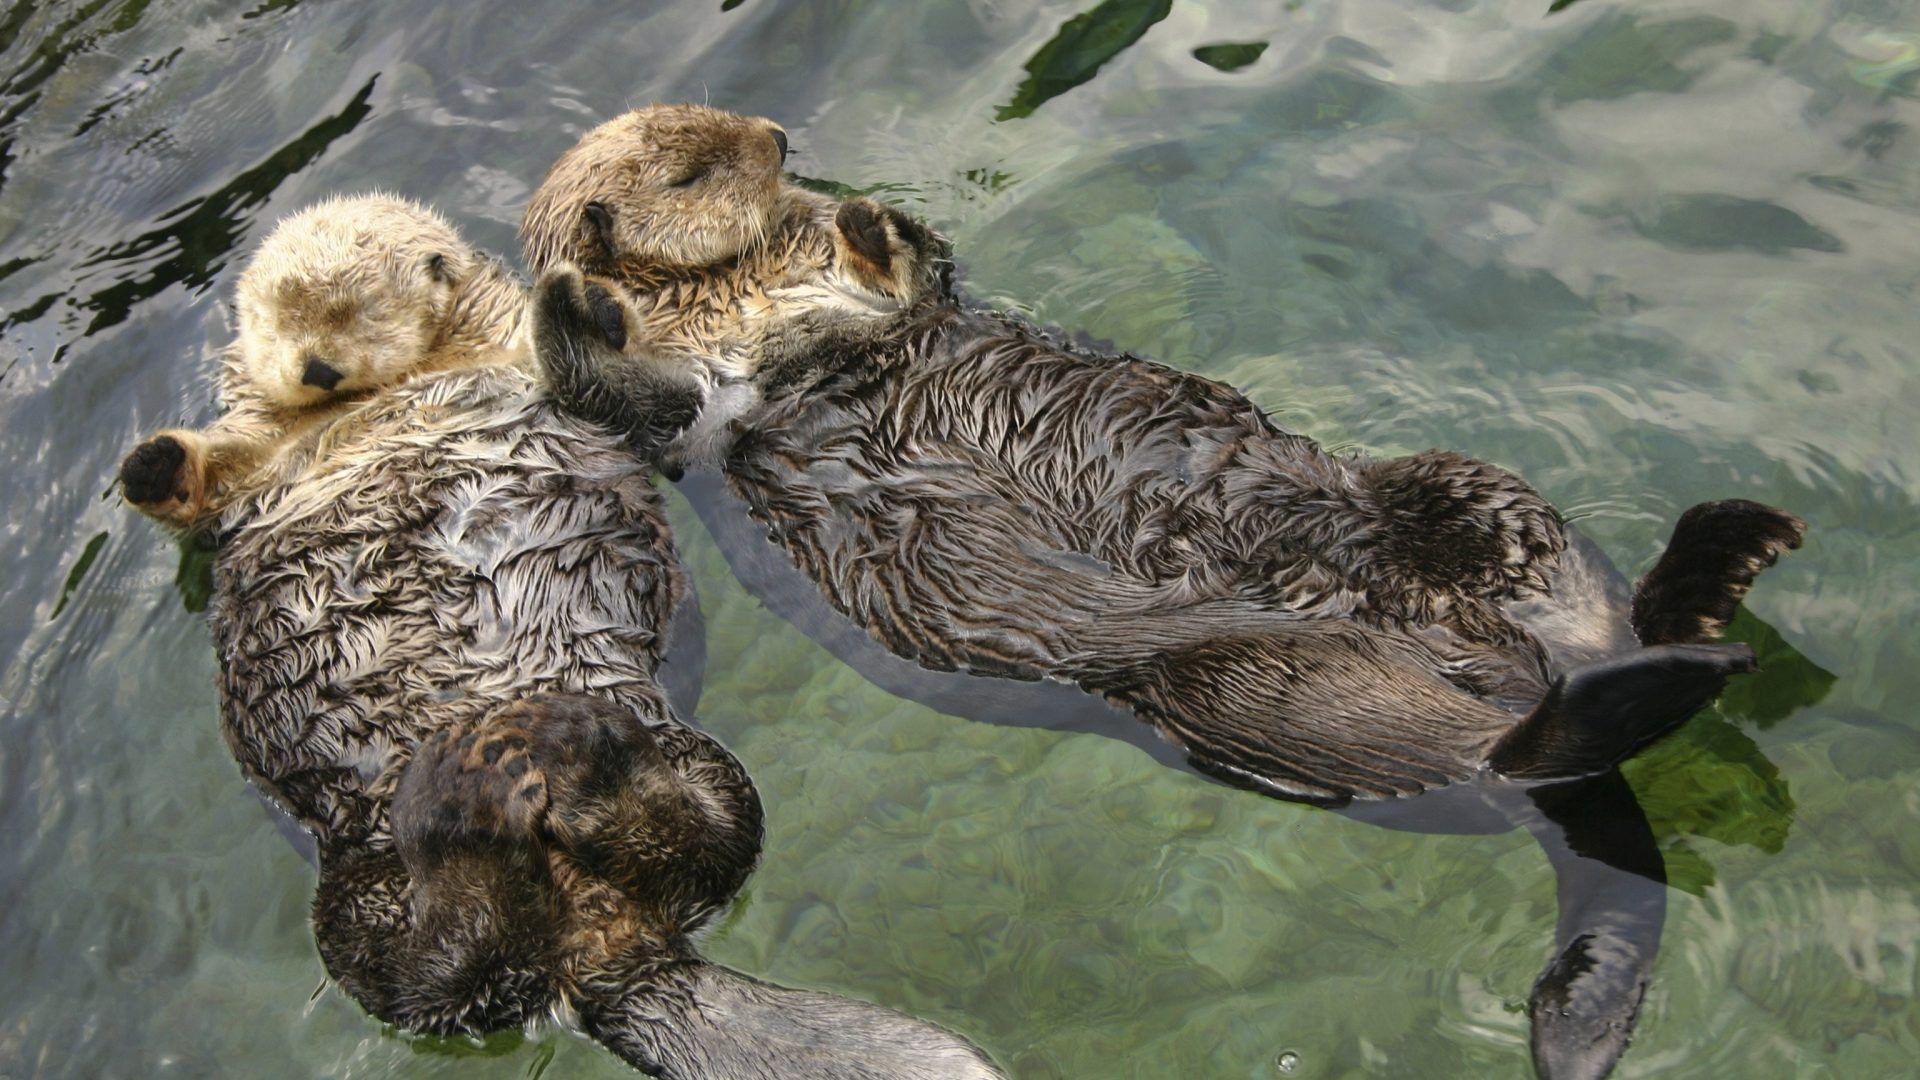 Otter Tag wallpaper: Ocean Sea Otter Background Pics Animals. Otter